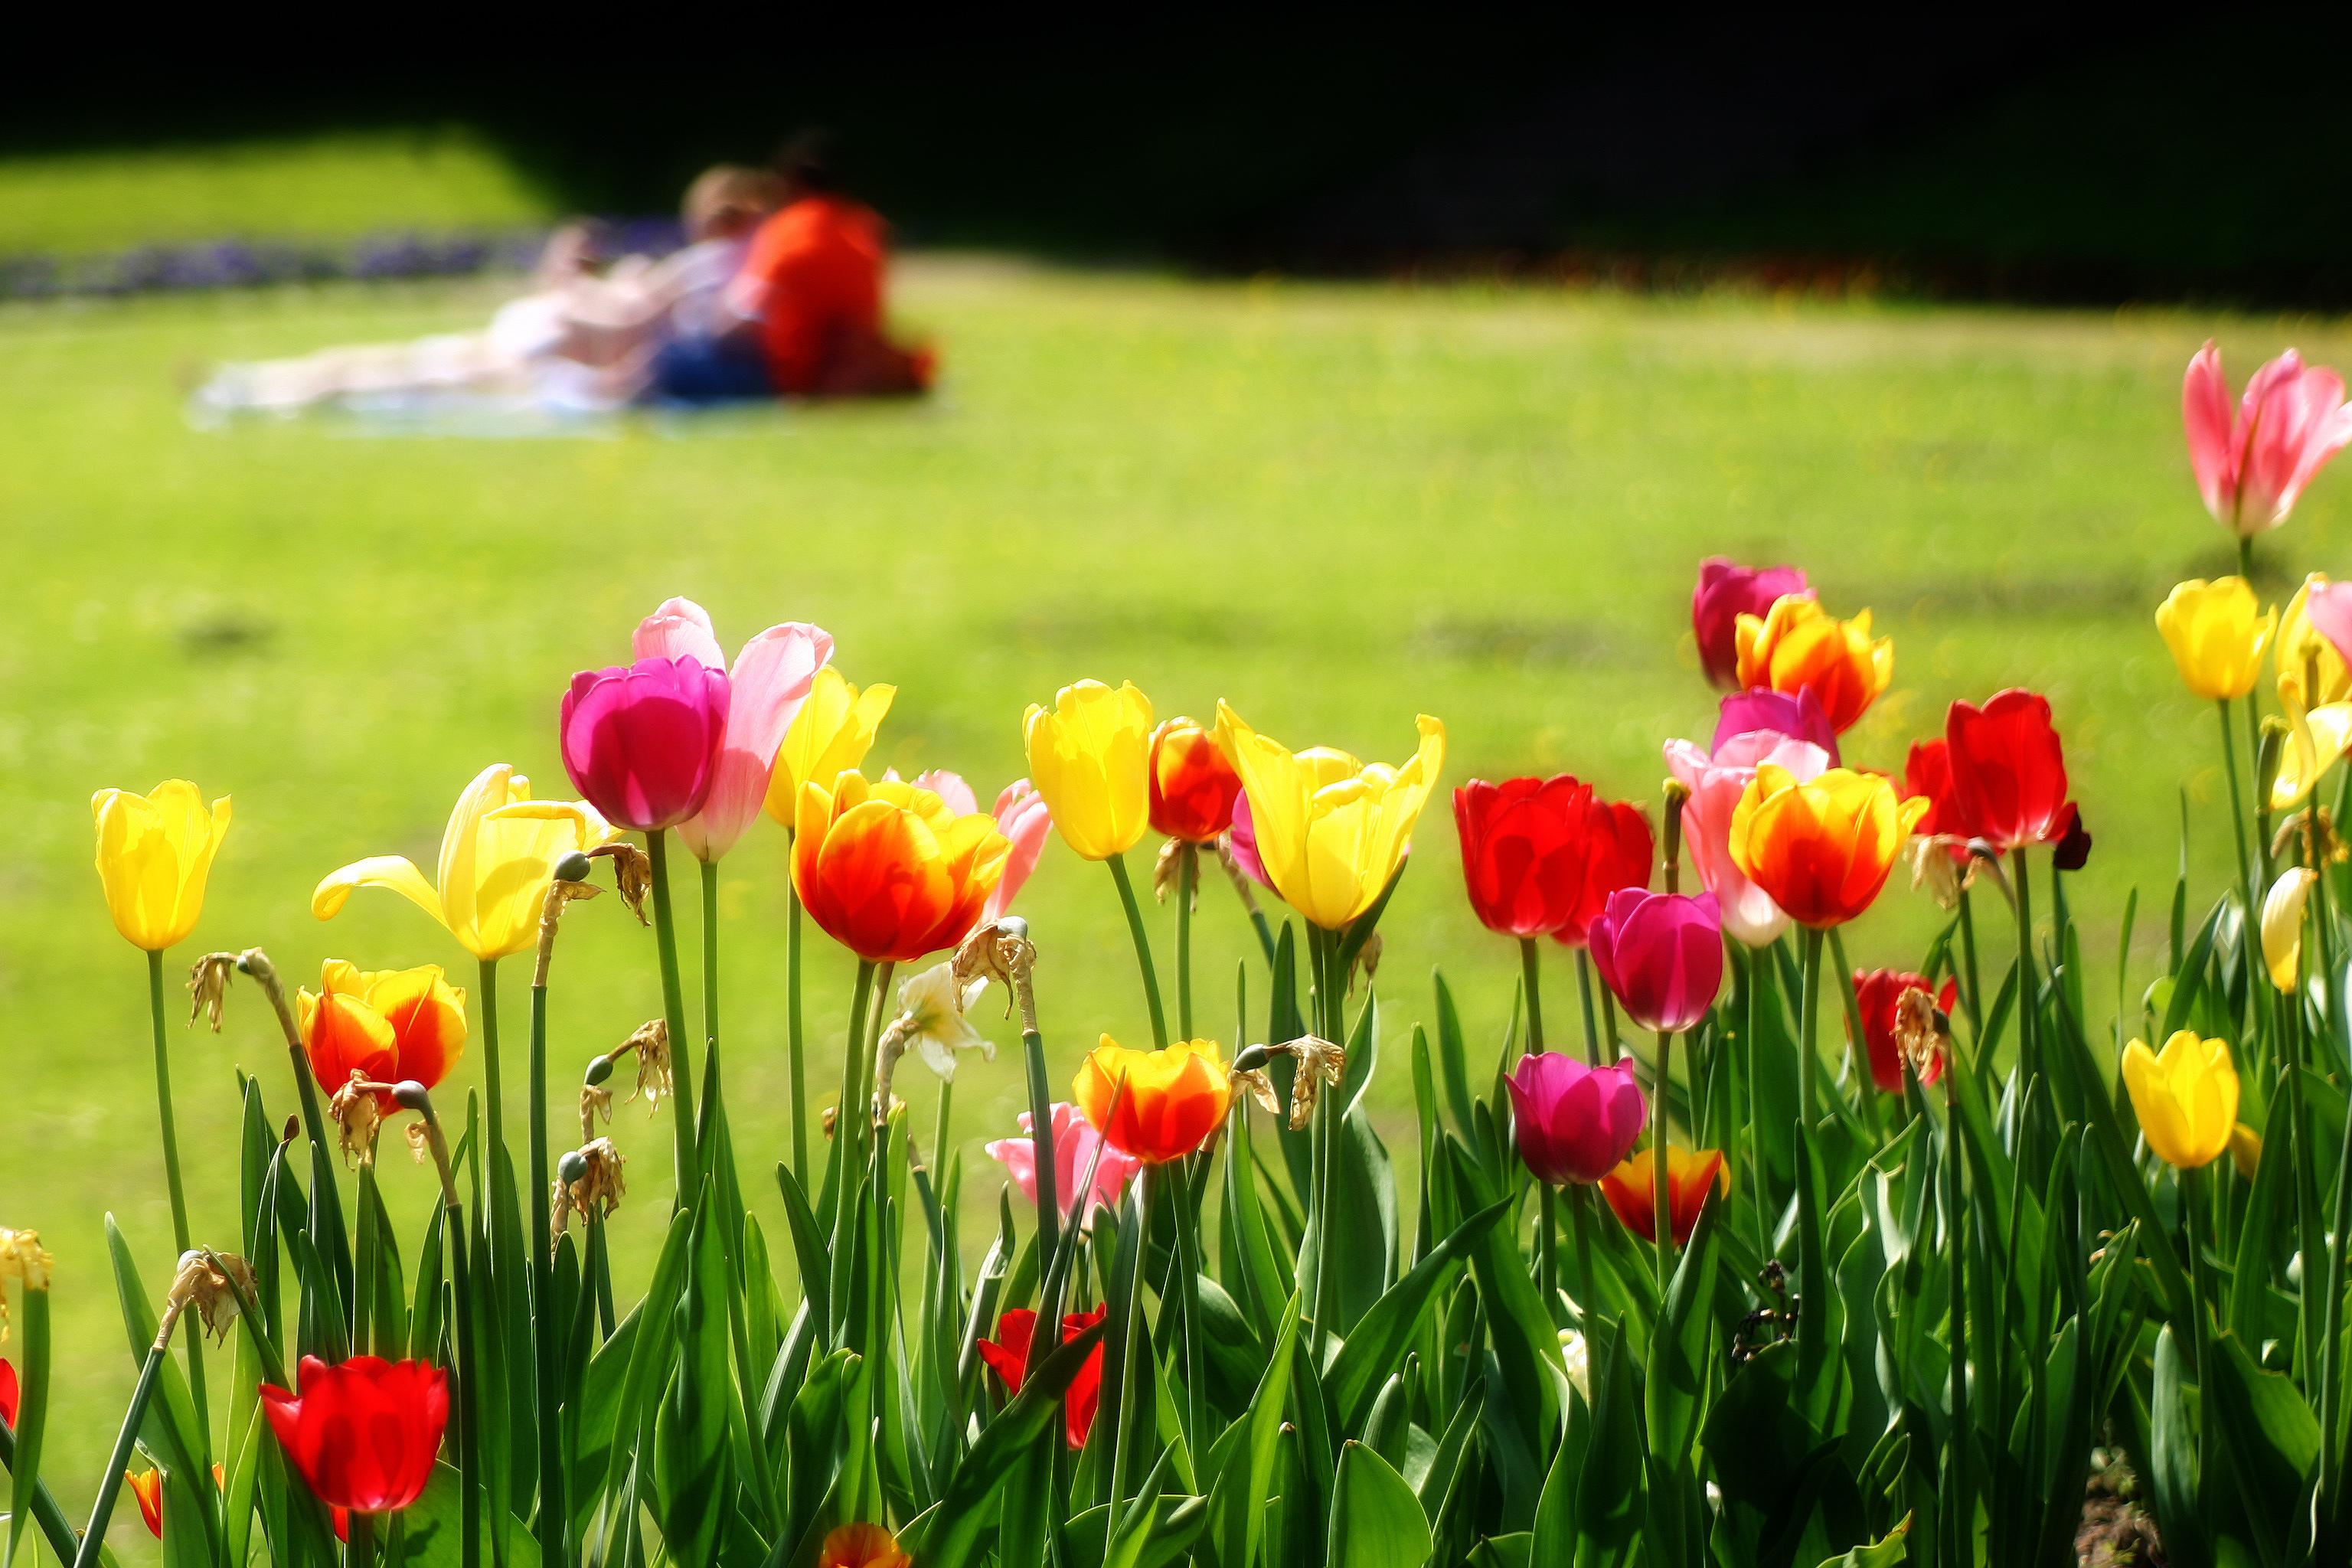 A tulip picnic / Photo by: https://www.shutterstock.com/g/vladiwelt